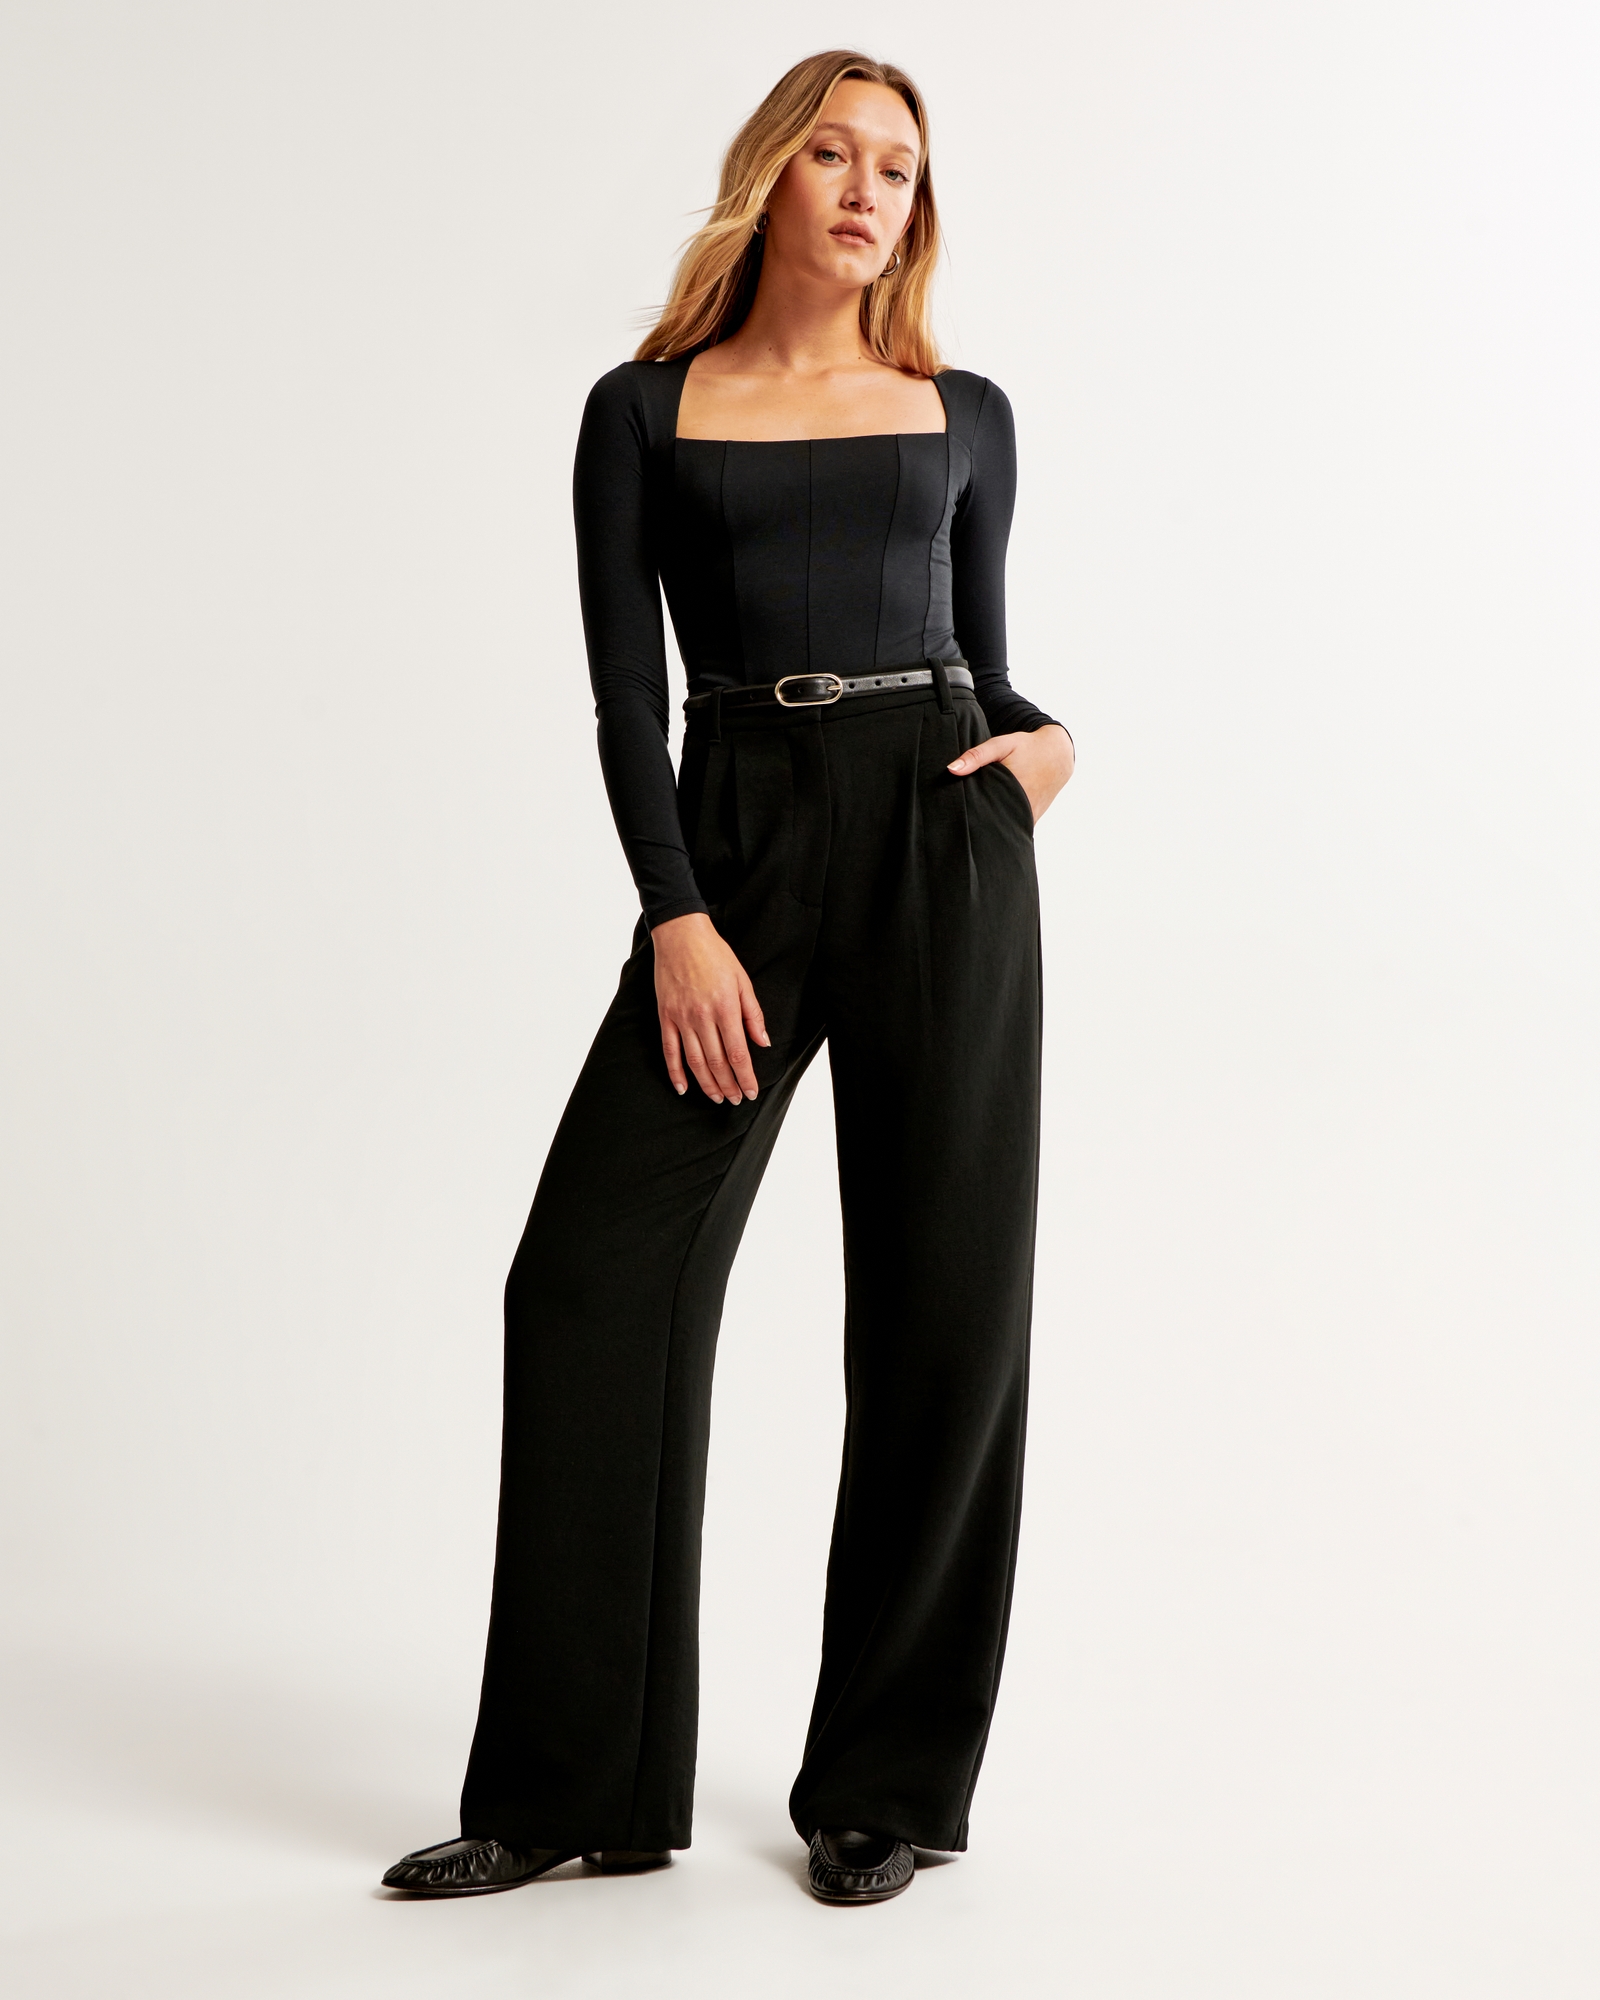 Devina Long Sleeve Corset Mesh Bodysuit (Black)  Black bodysuit, Dressy  tops, Denim accessories